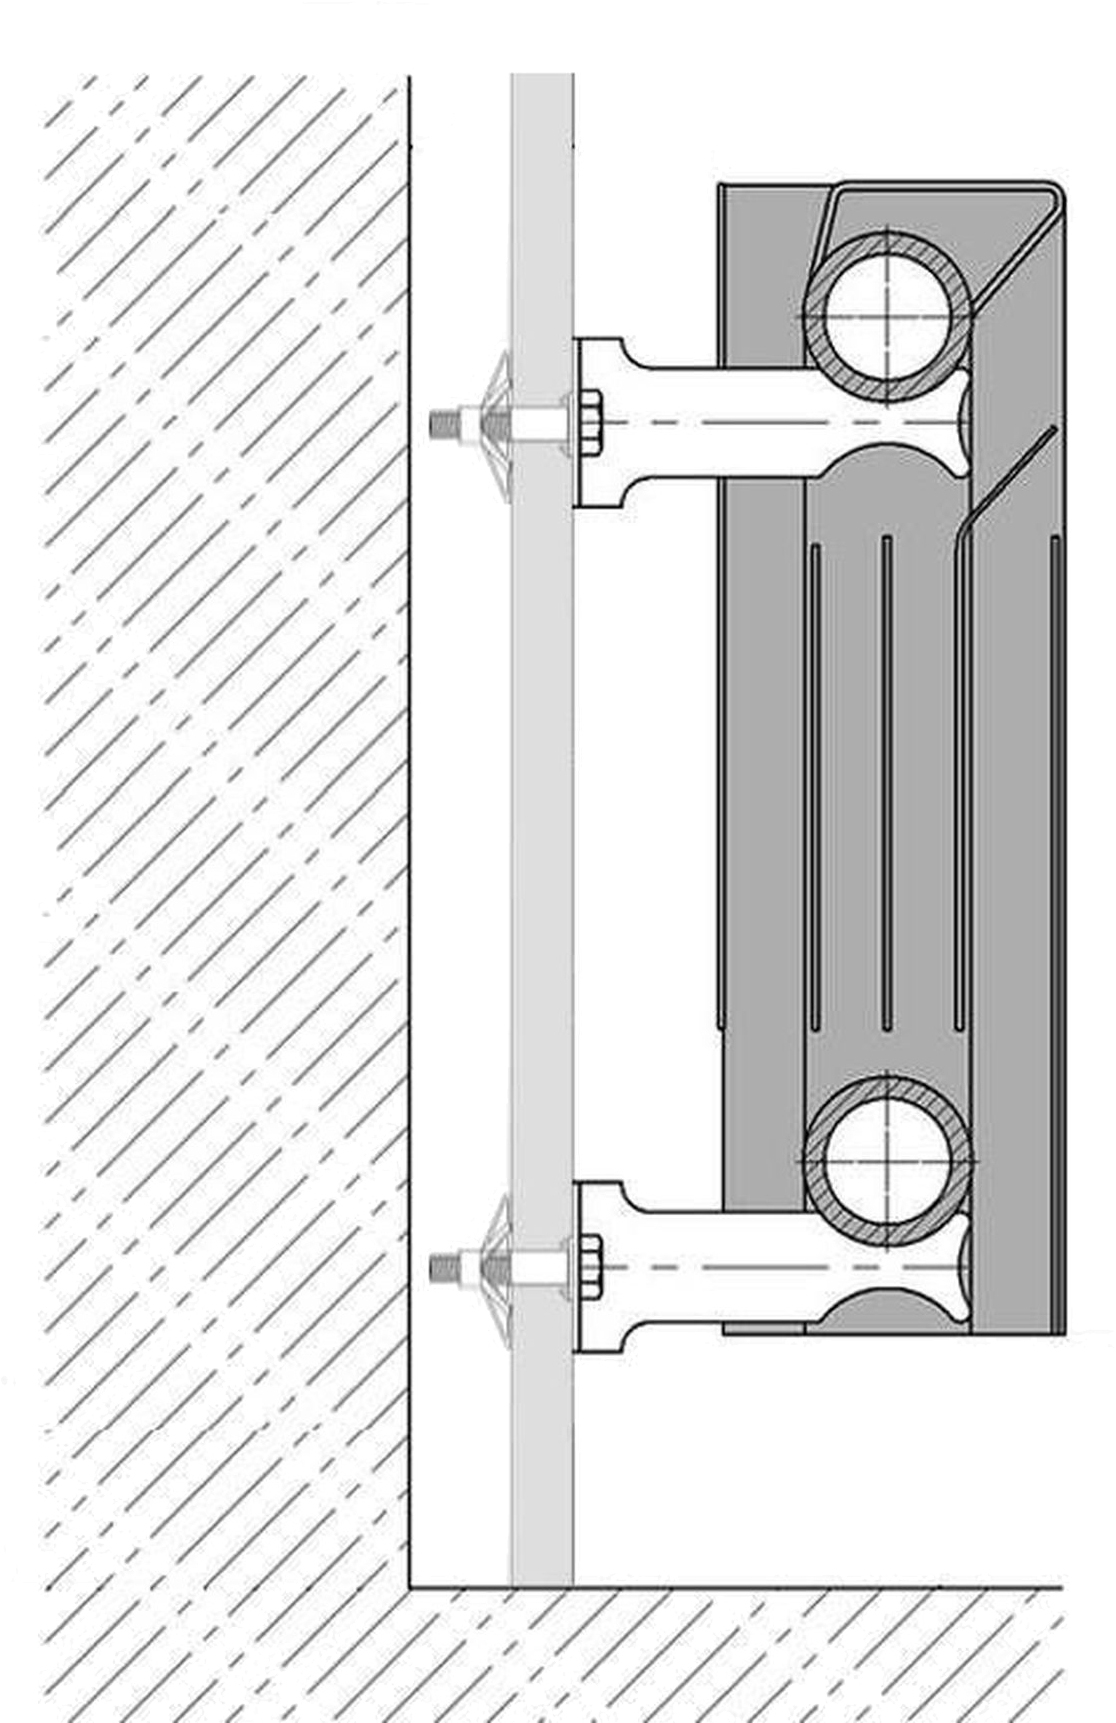 Кронштейн секционного радиатора Cristal NS-1012 угловой оцинкованный 100x77x47мм (кратно 2) цена 24.00 грн - фотография 2